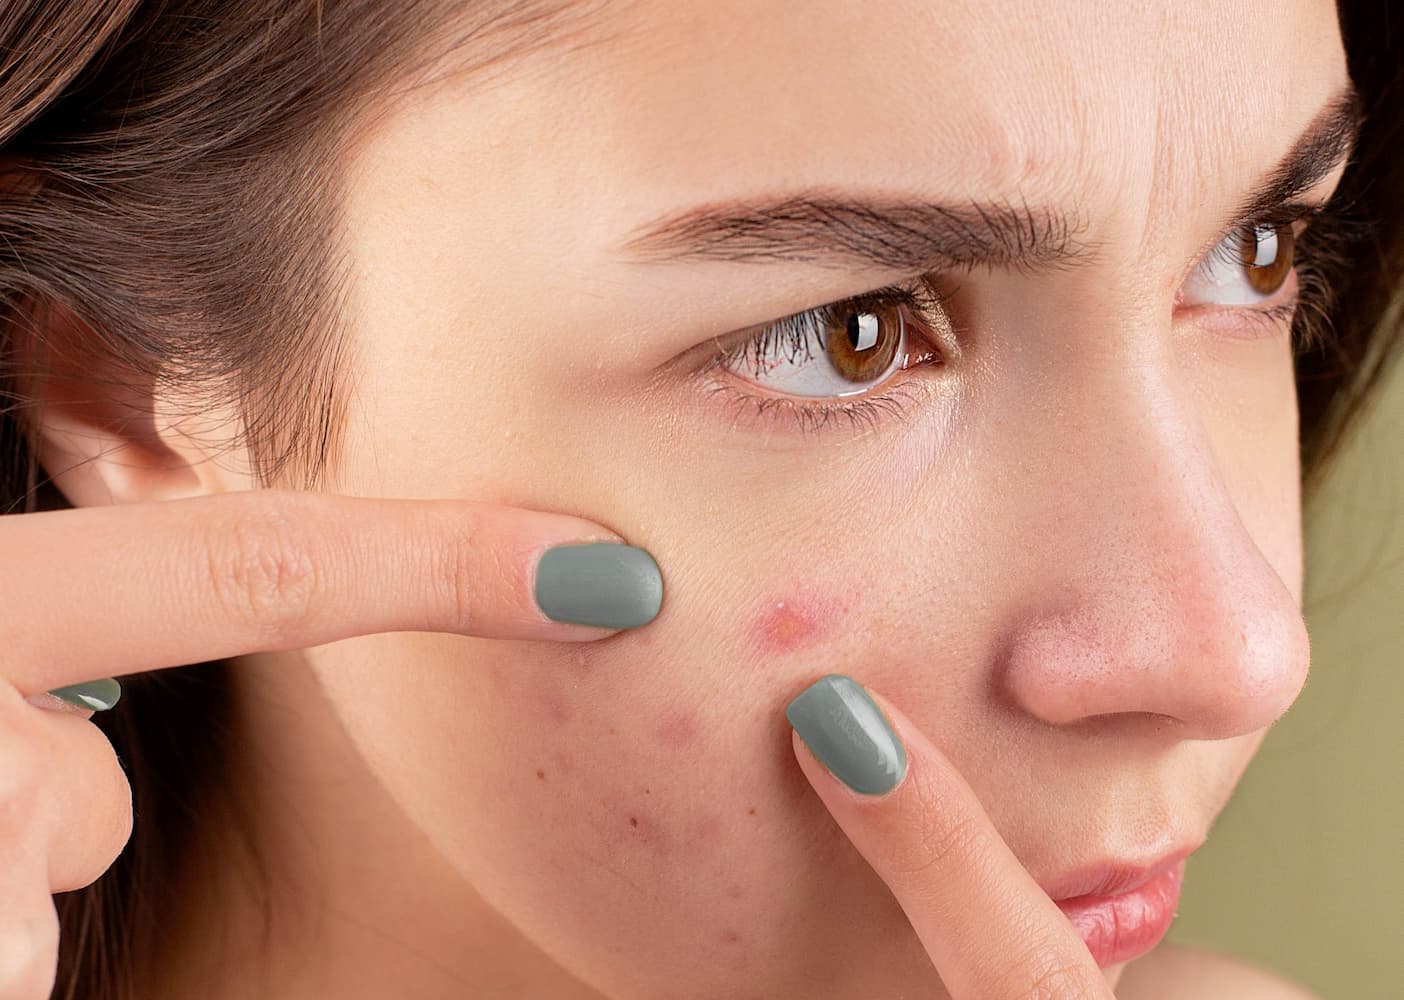 Acne, common skin conditions